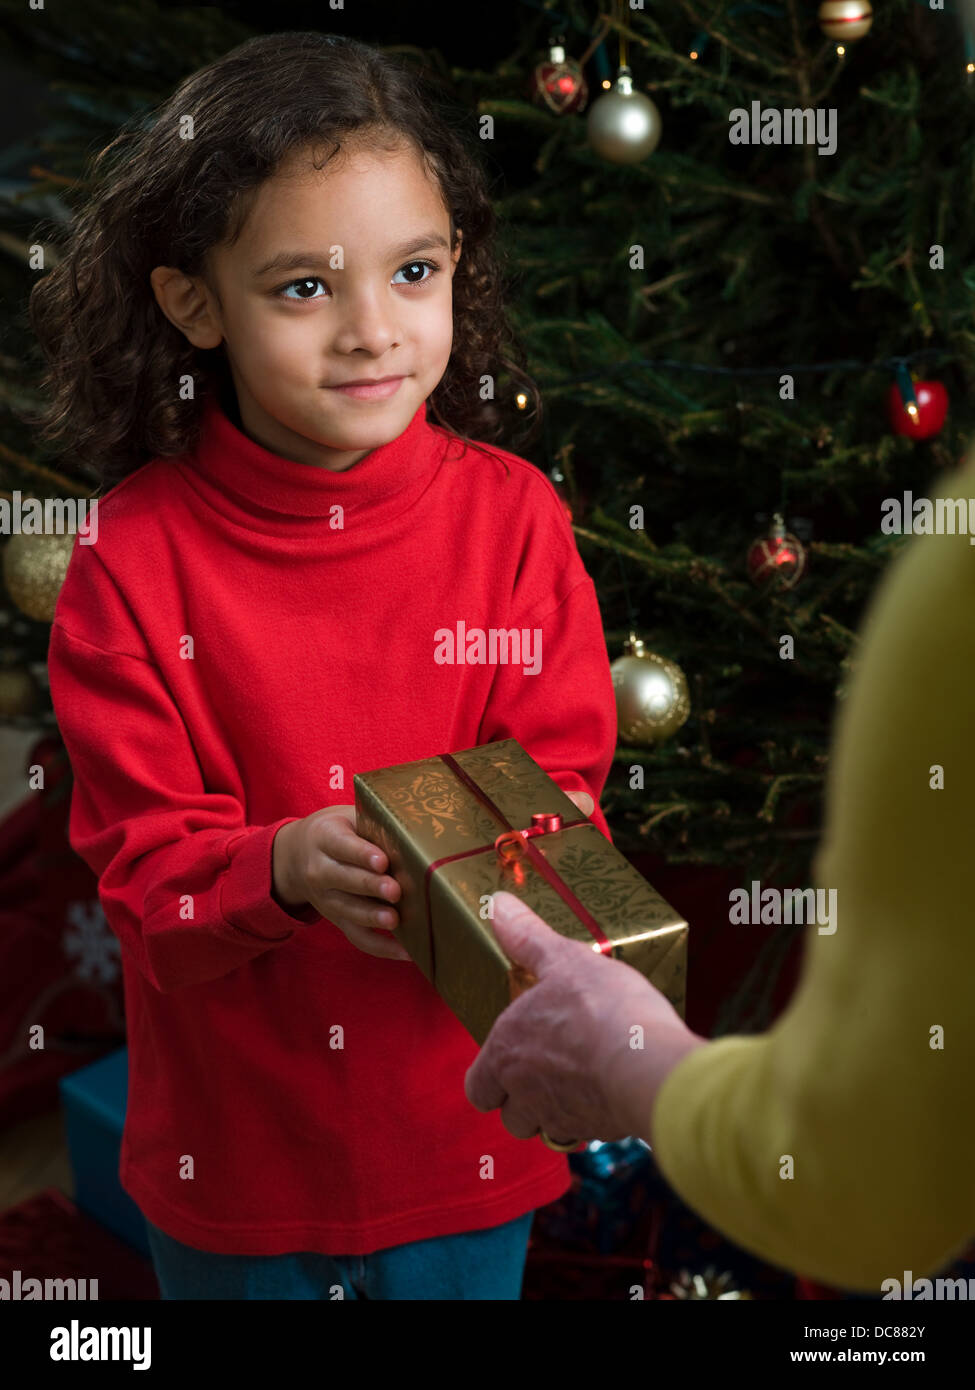 girl receiving gift at Christmas Stock Photo